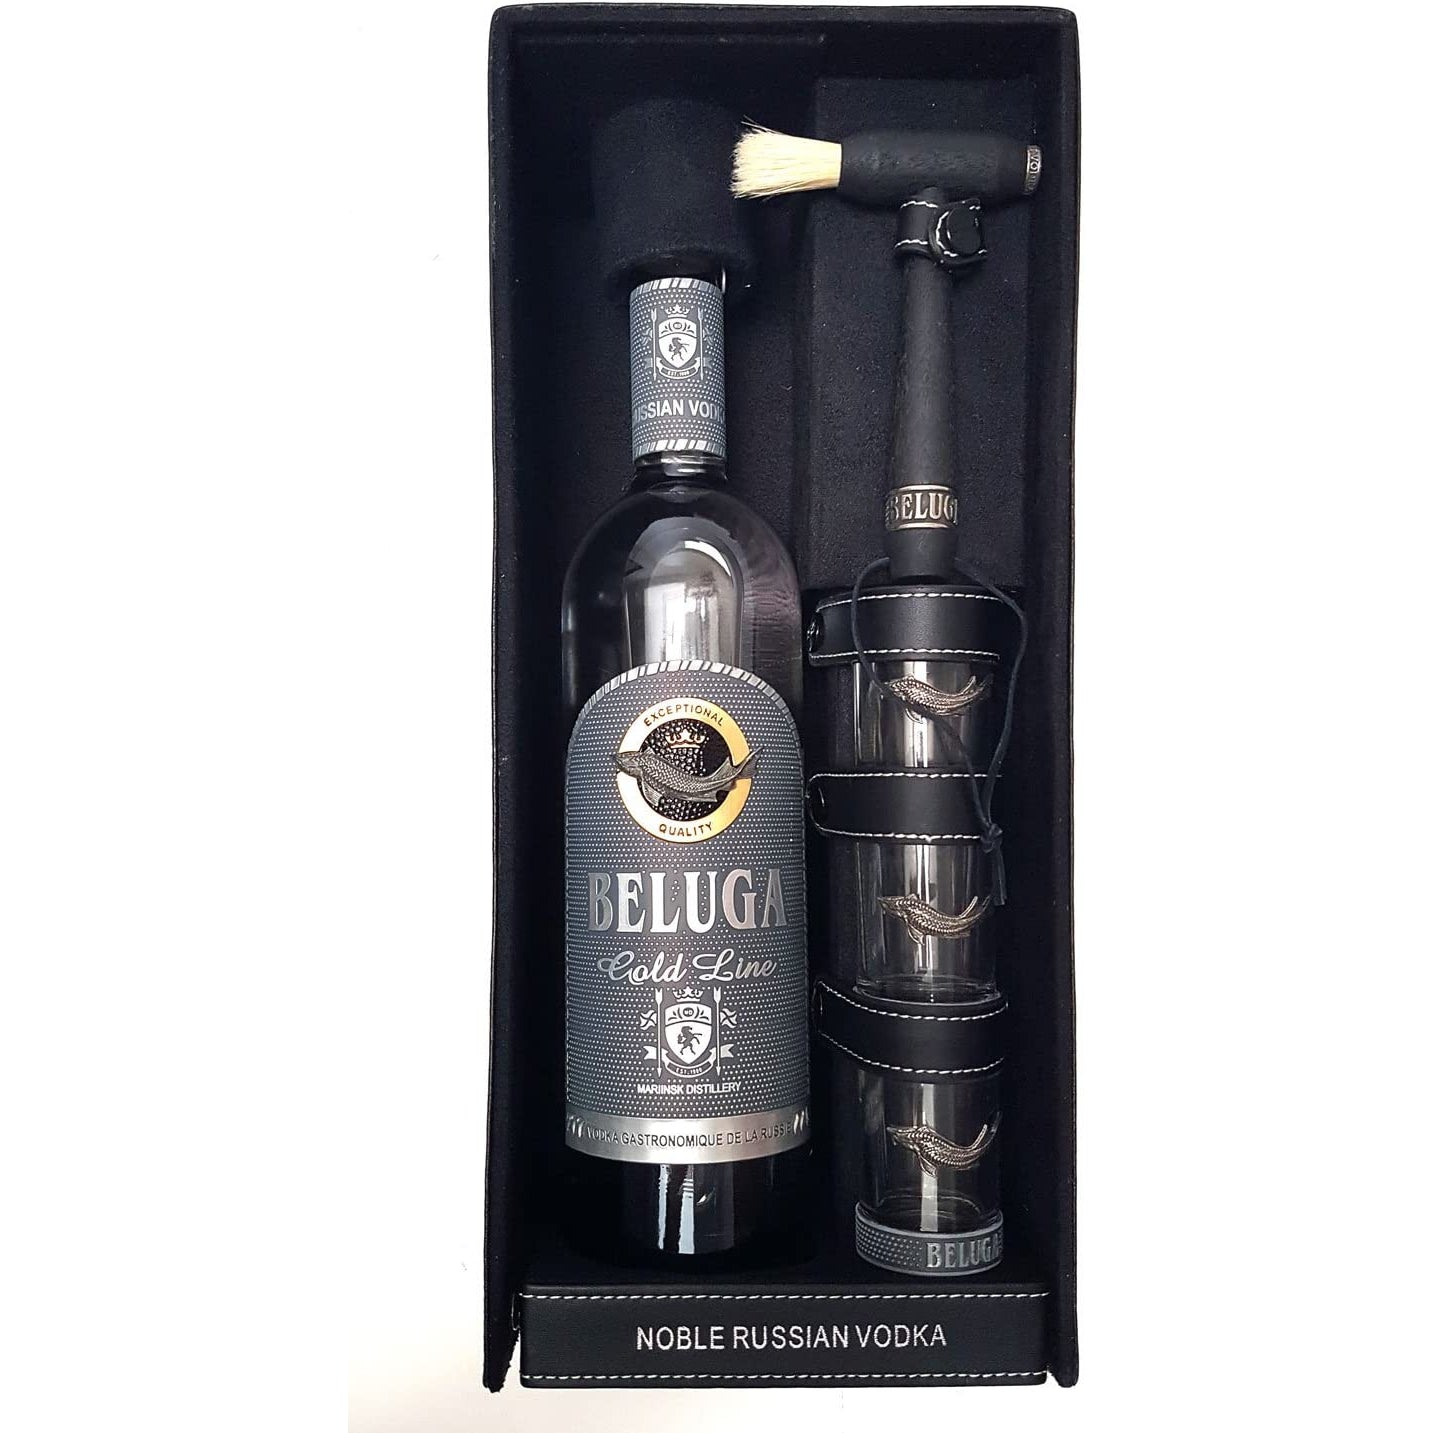 Beluga Gold Line Noble Russian Vodka 40% Vol. 0,7l in Giftbox in Leder